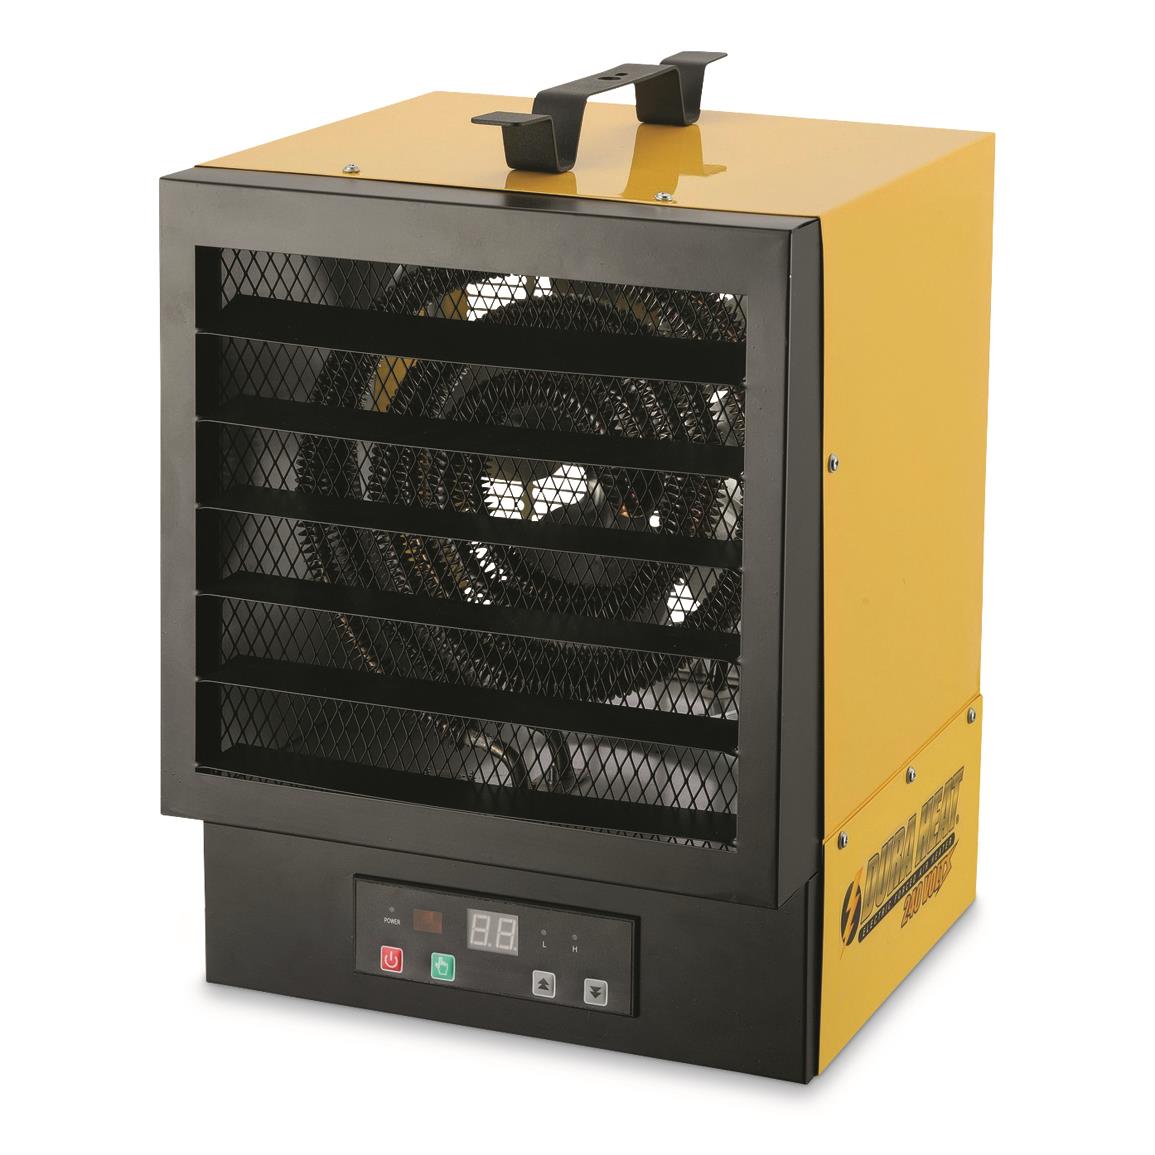 Dura Heat Electric Forced Air Heater with Remote Control 34,120 Btu